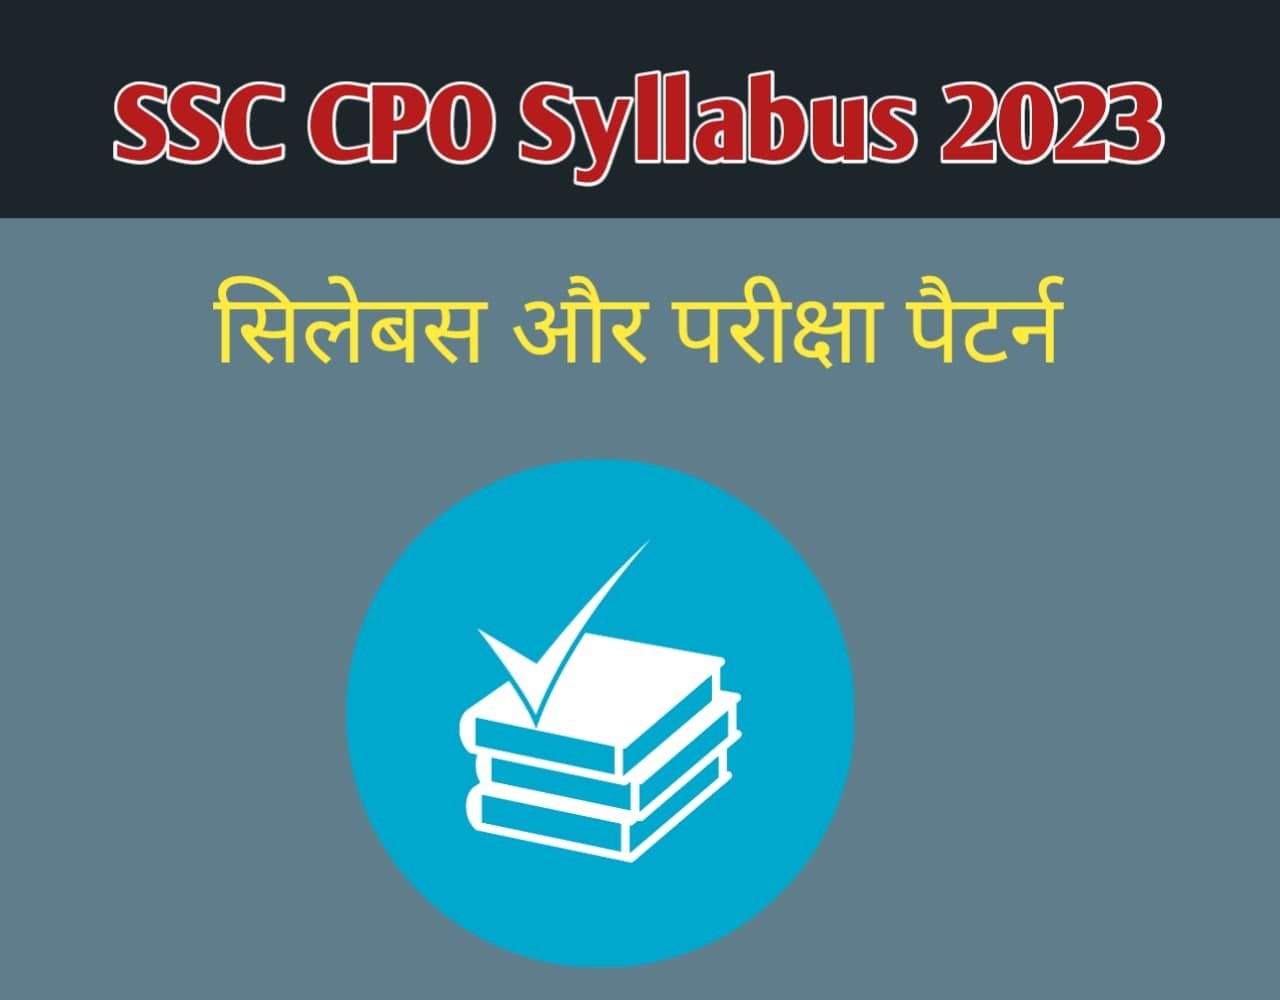 SSC CPO Syllabus In Hindi 2023 | सिलेबस और परीक्षा पैटर्न